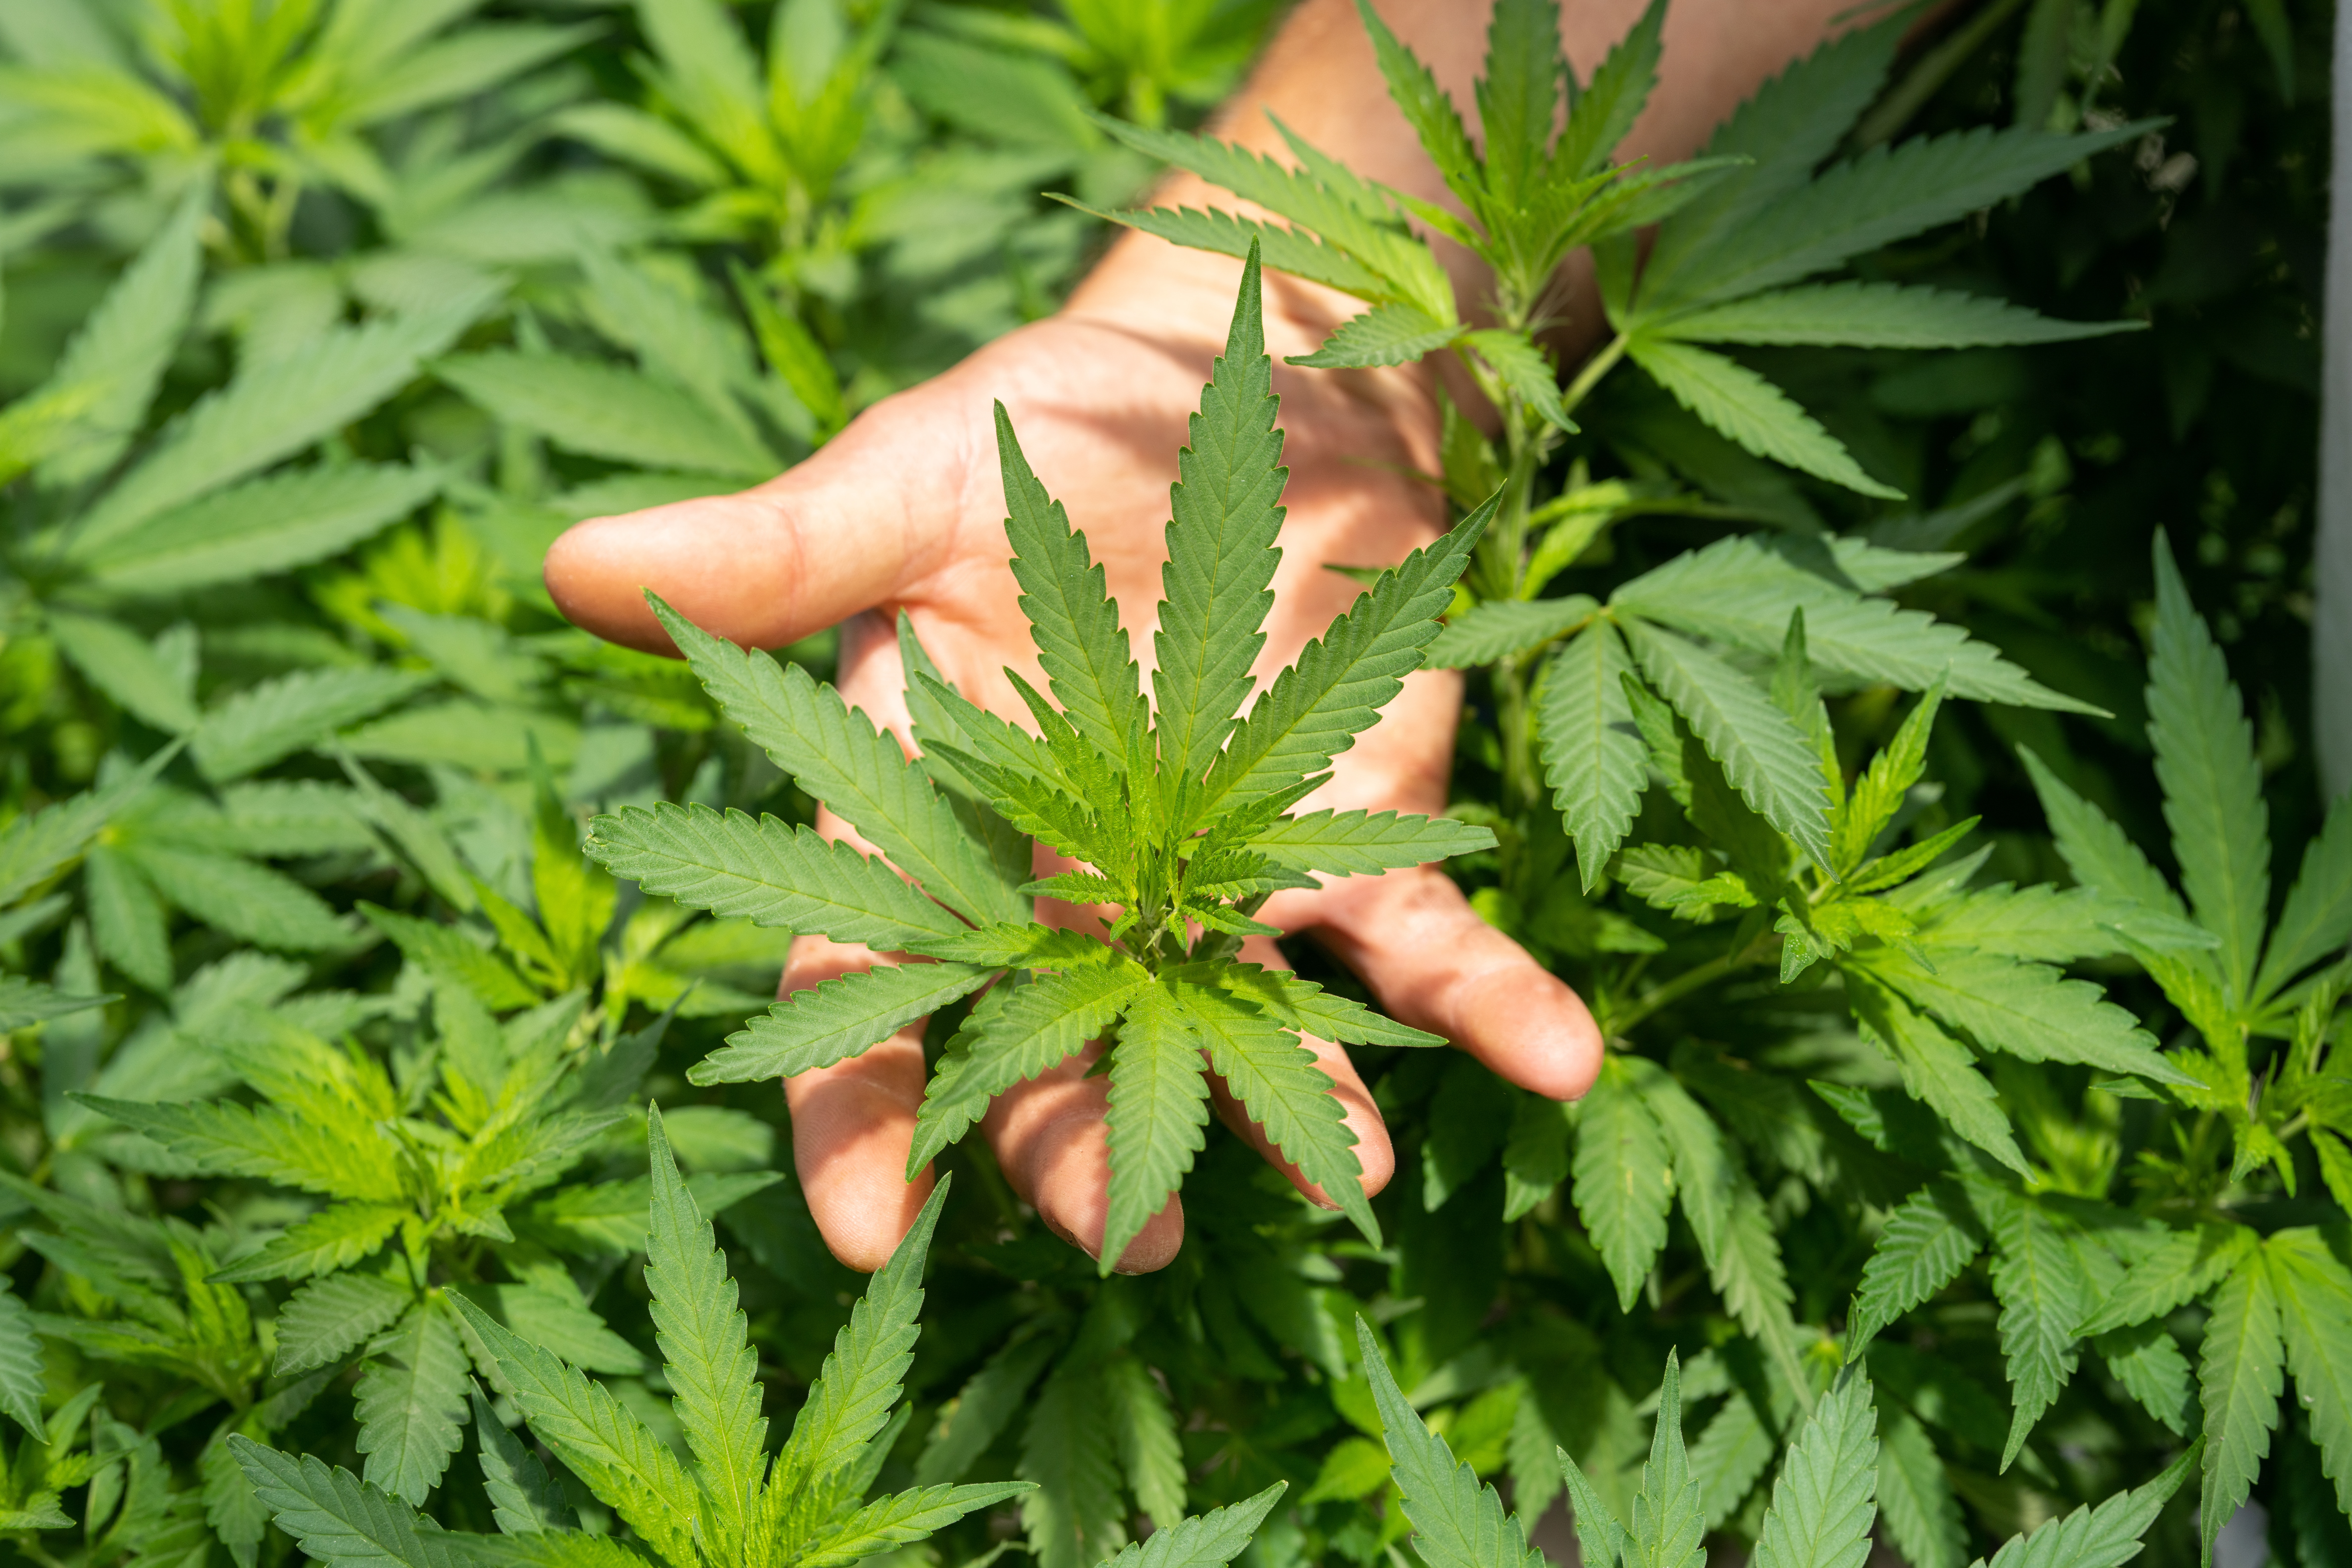 Issue 2: Ohio’s Recreational Marijuana Legalization Ballot Initiative